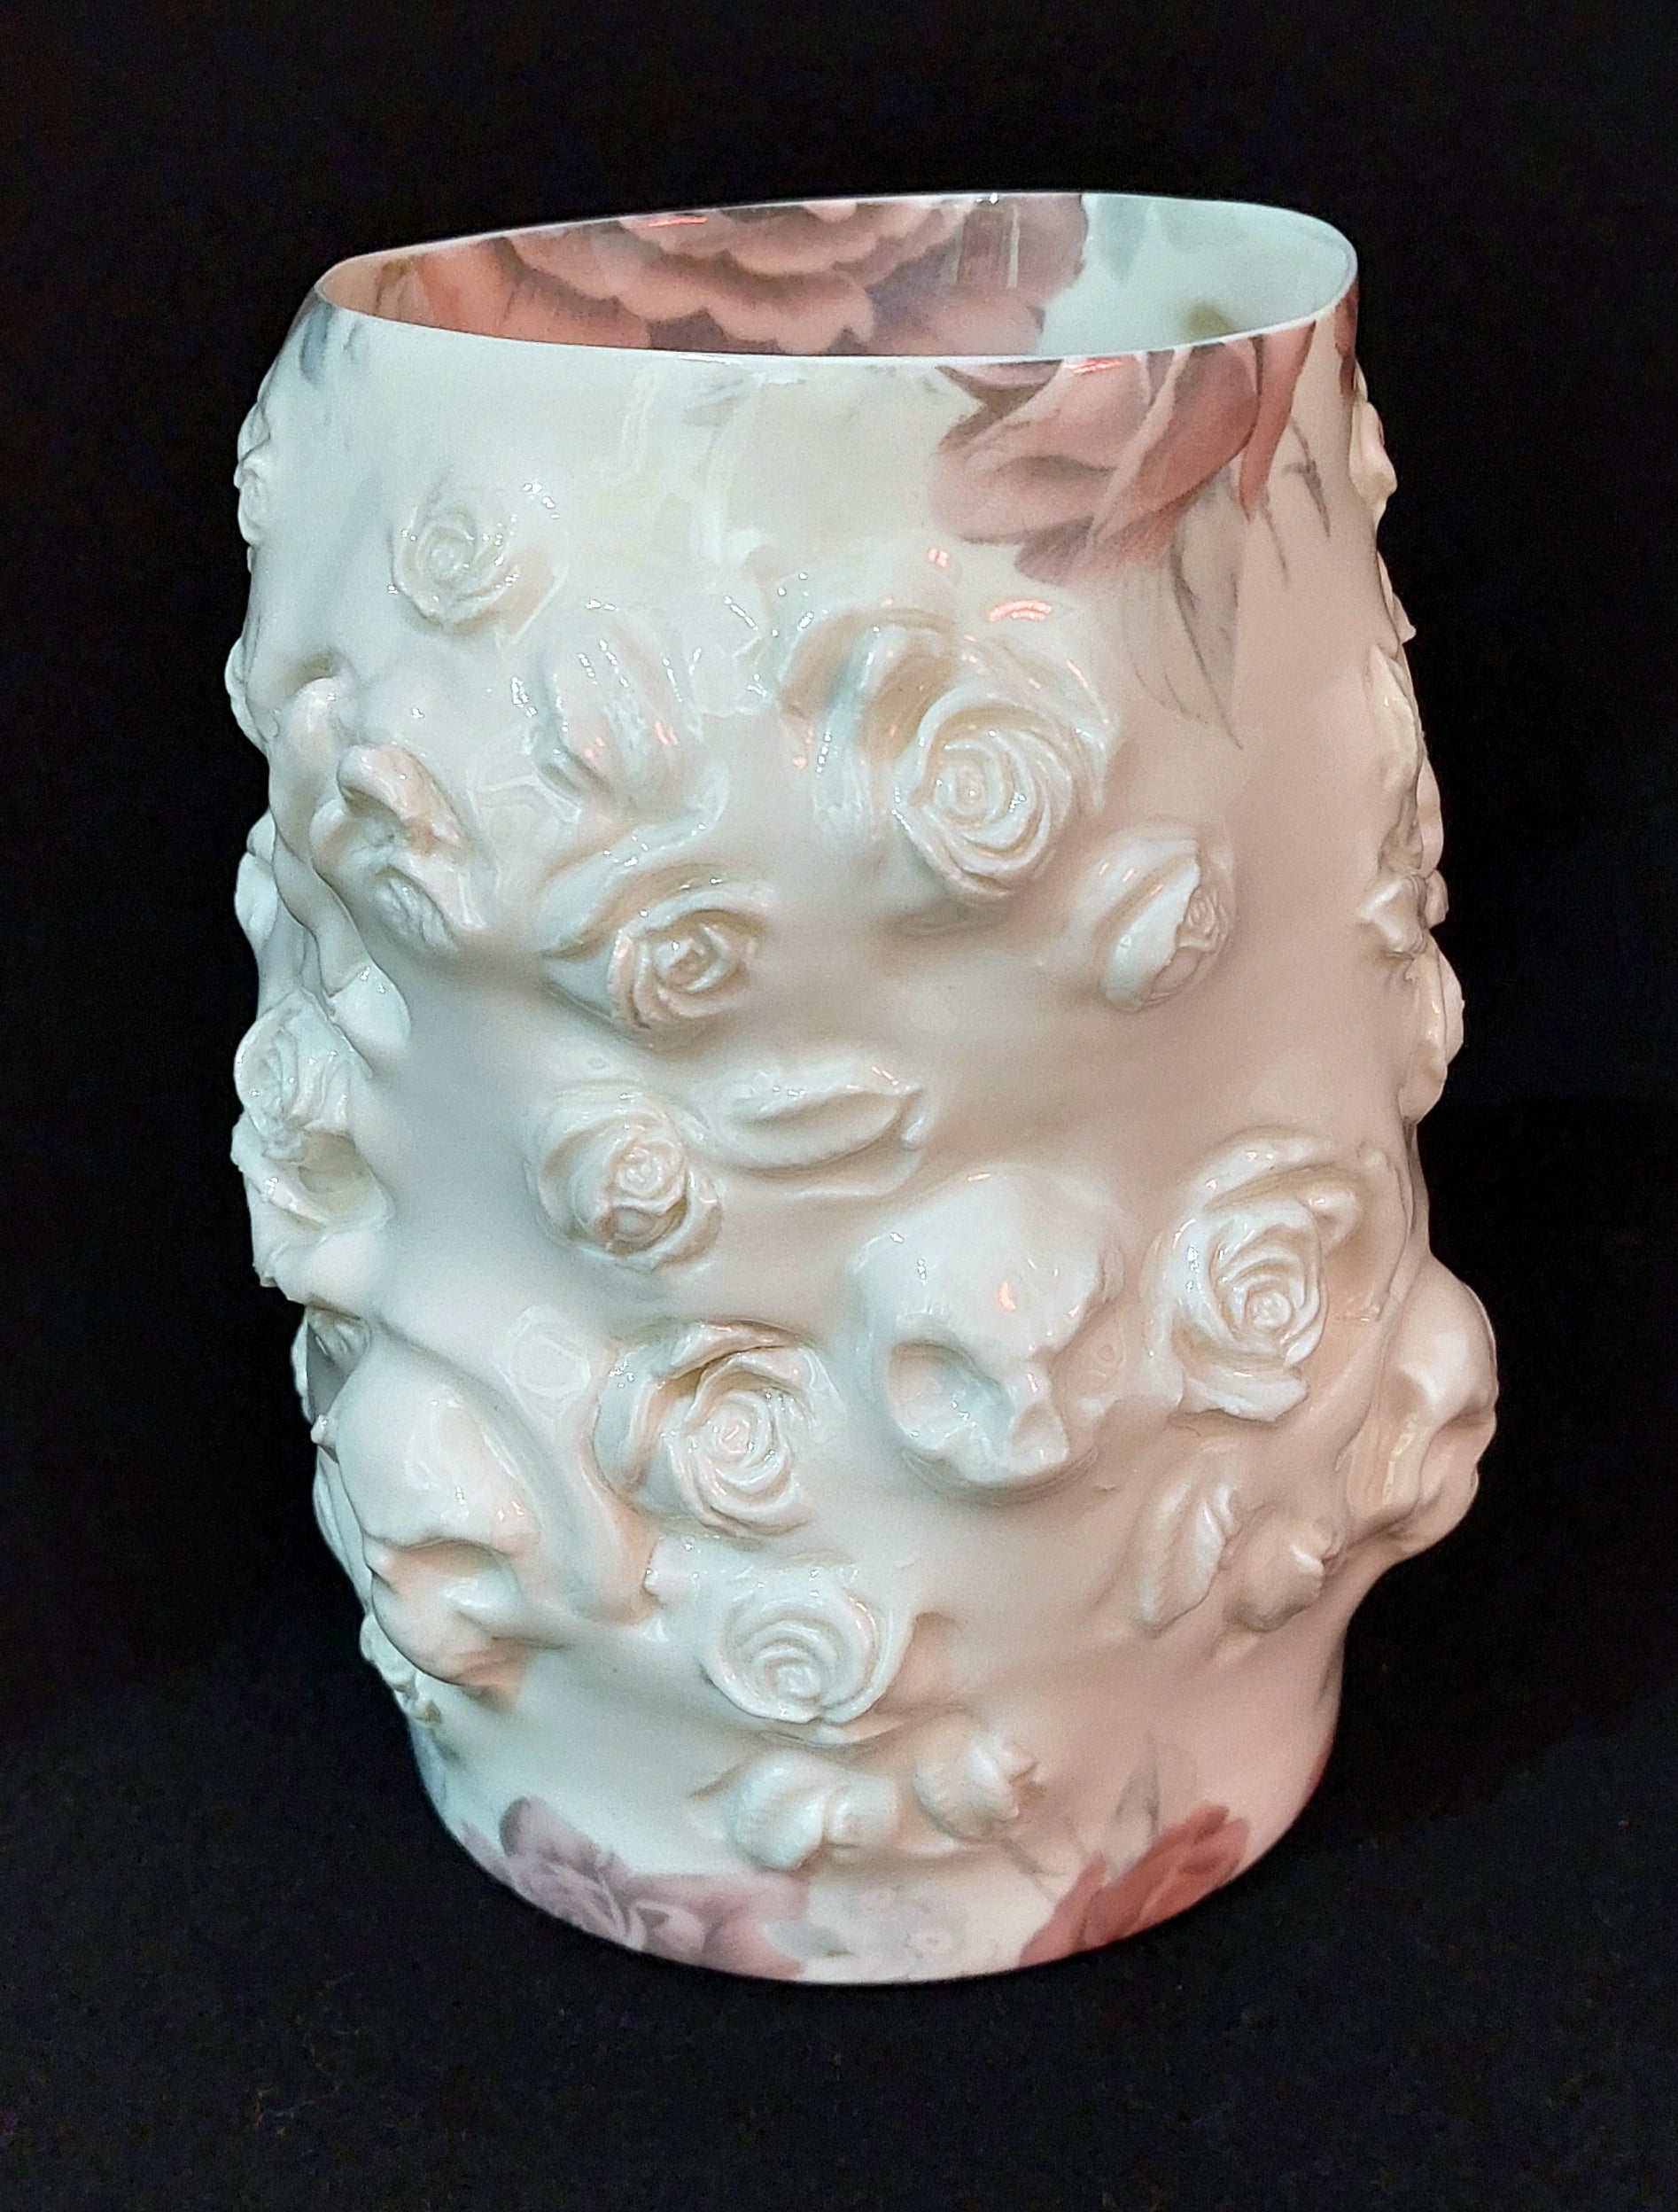 Anja-Lubach-Rose-Skull-Vase-12x16